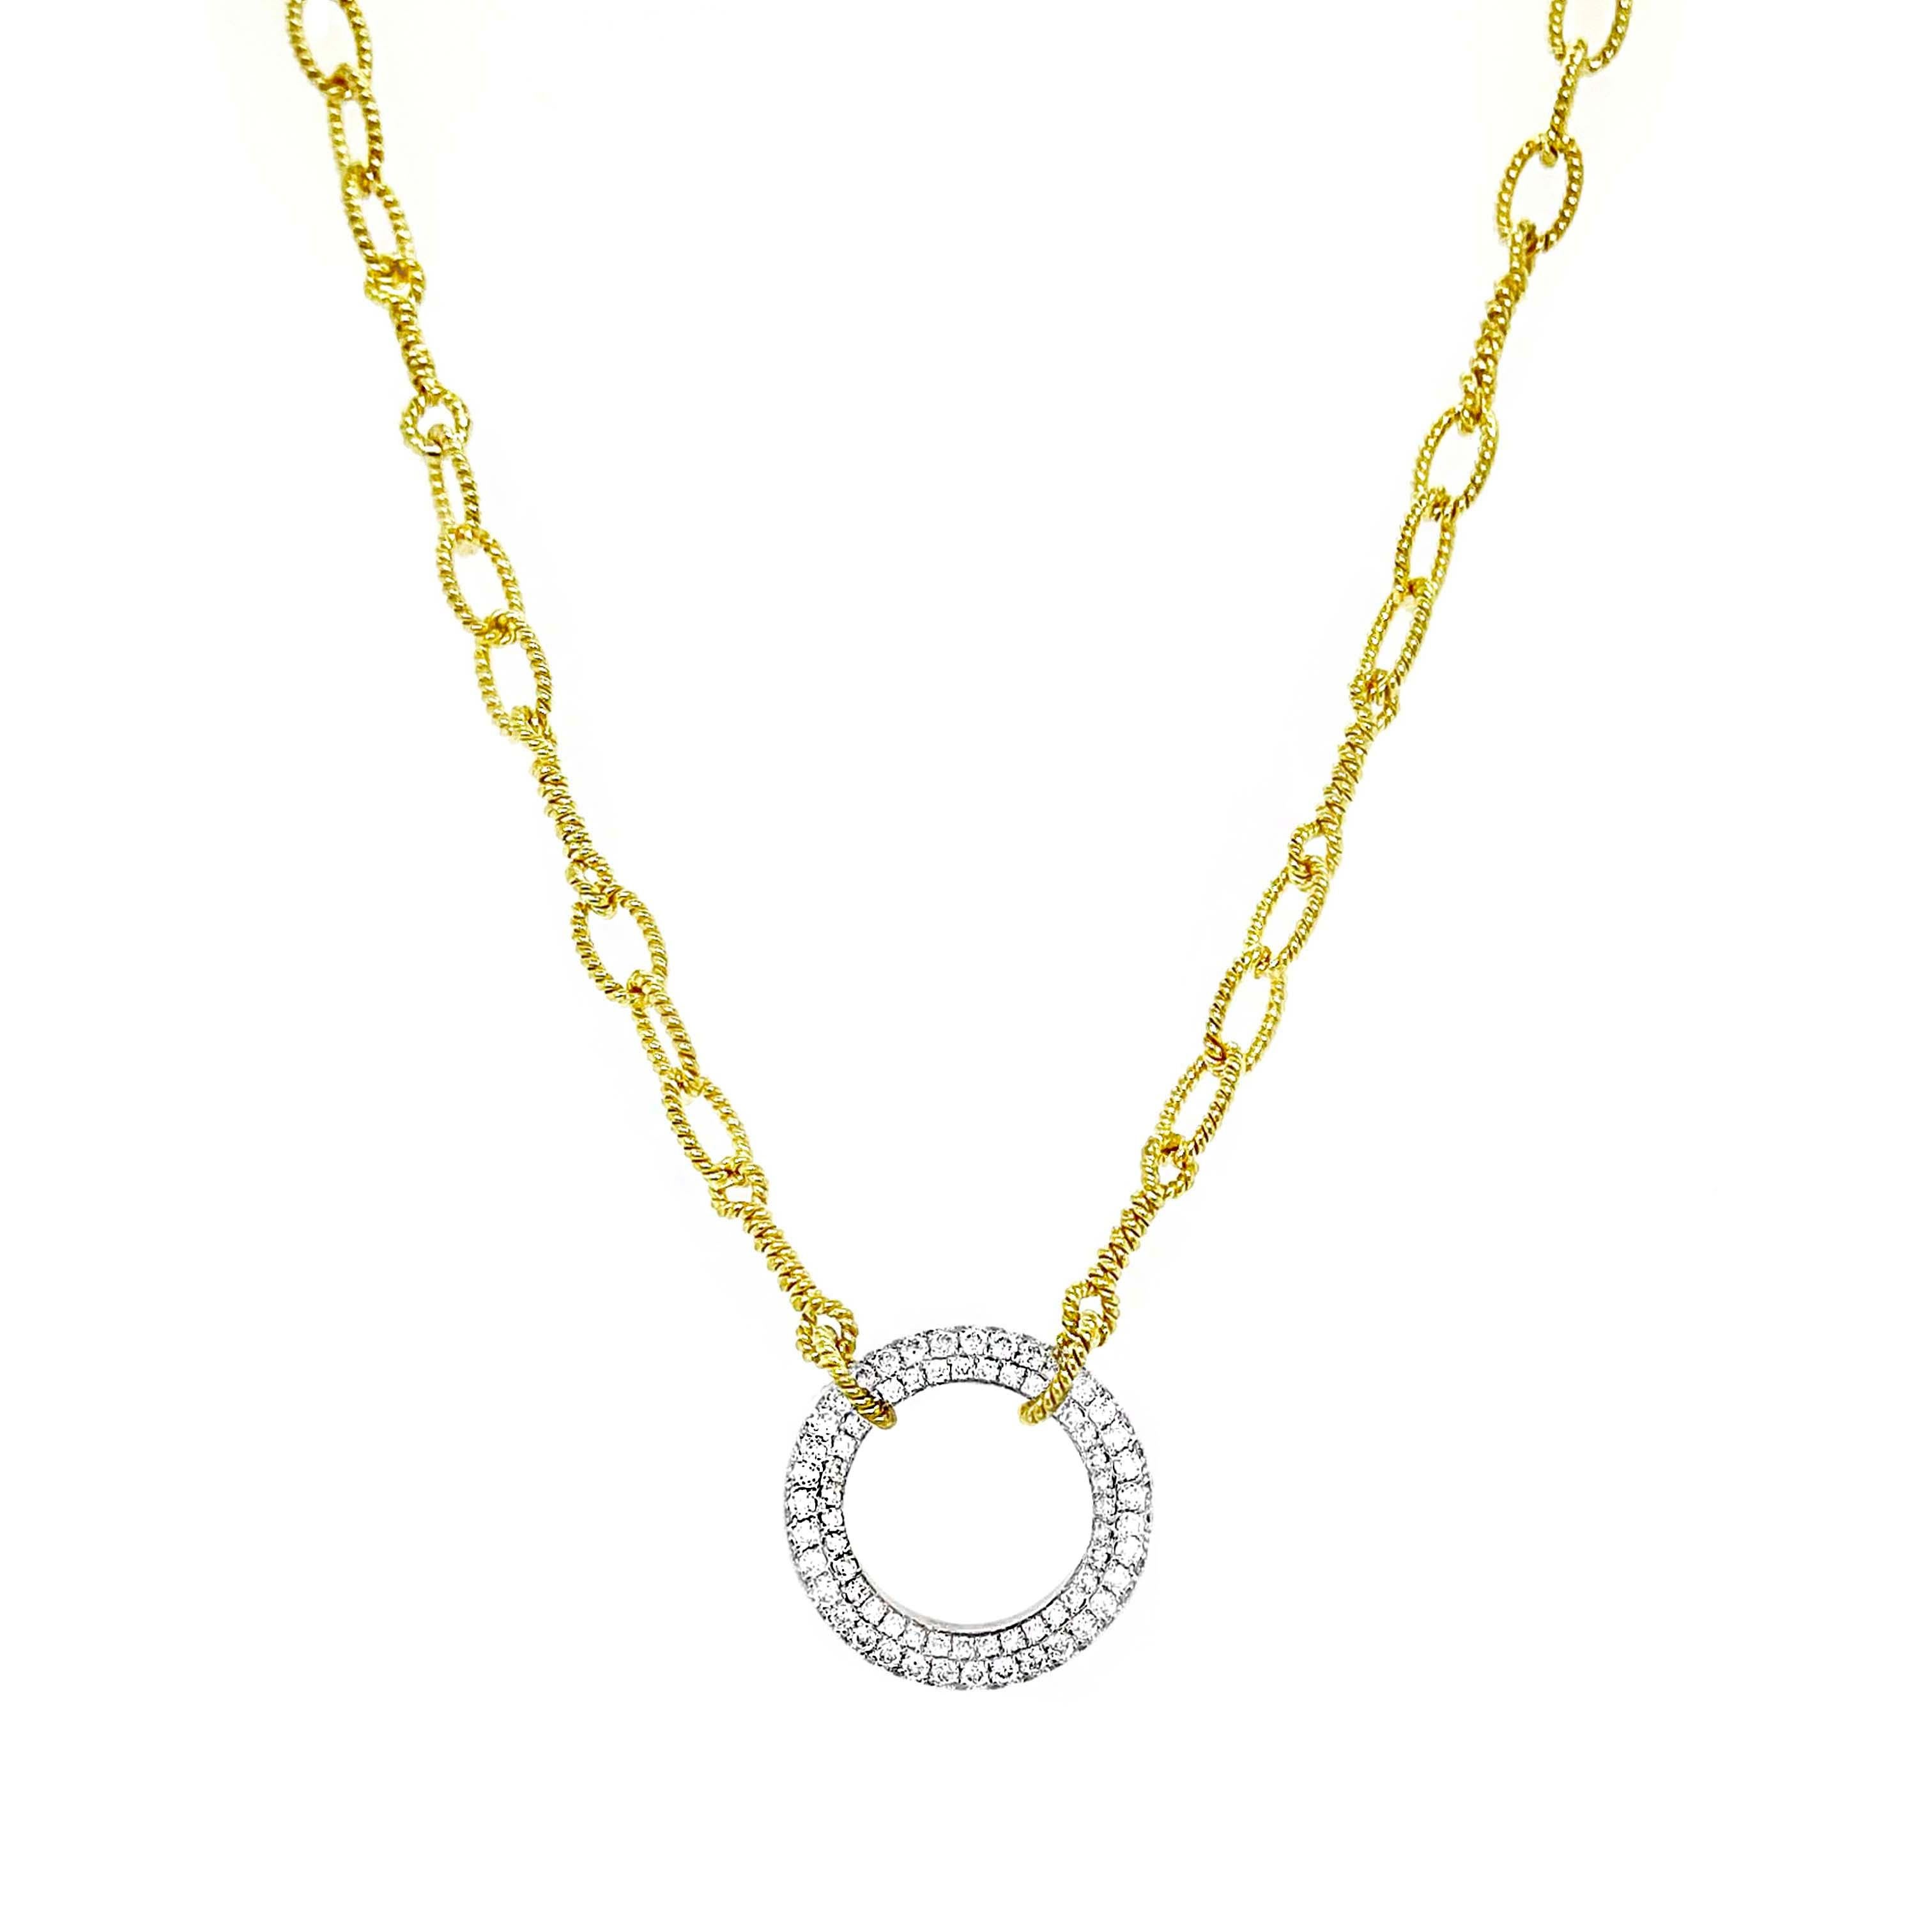 18 Karat Handmade Chain Necklace with Diamond Set Circle